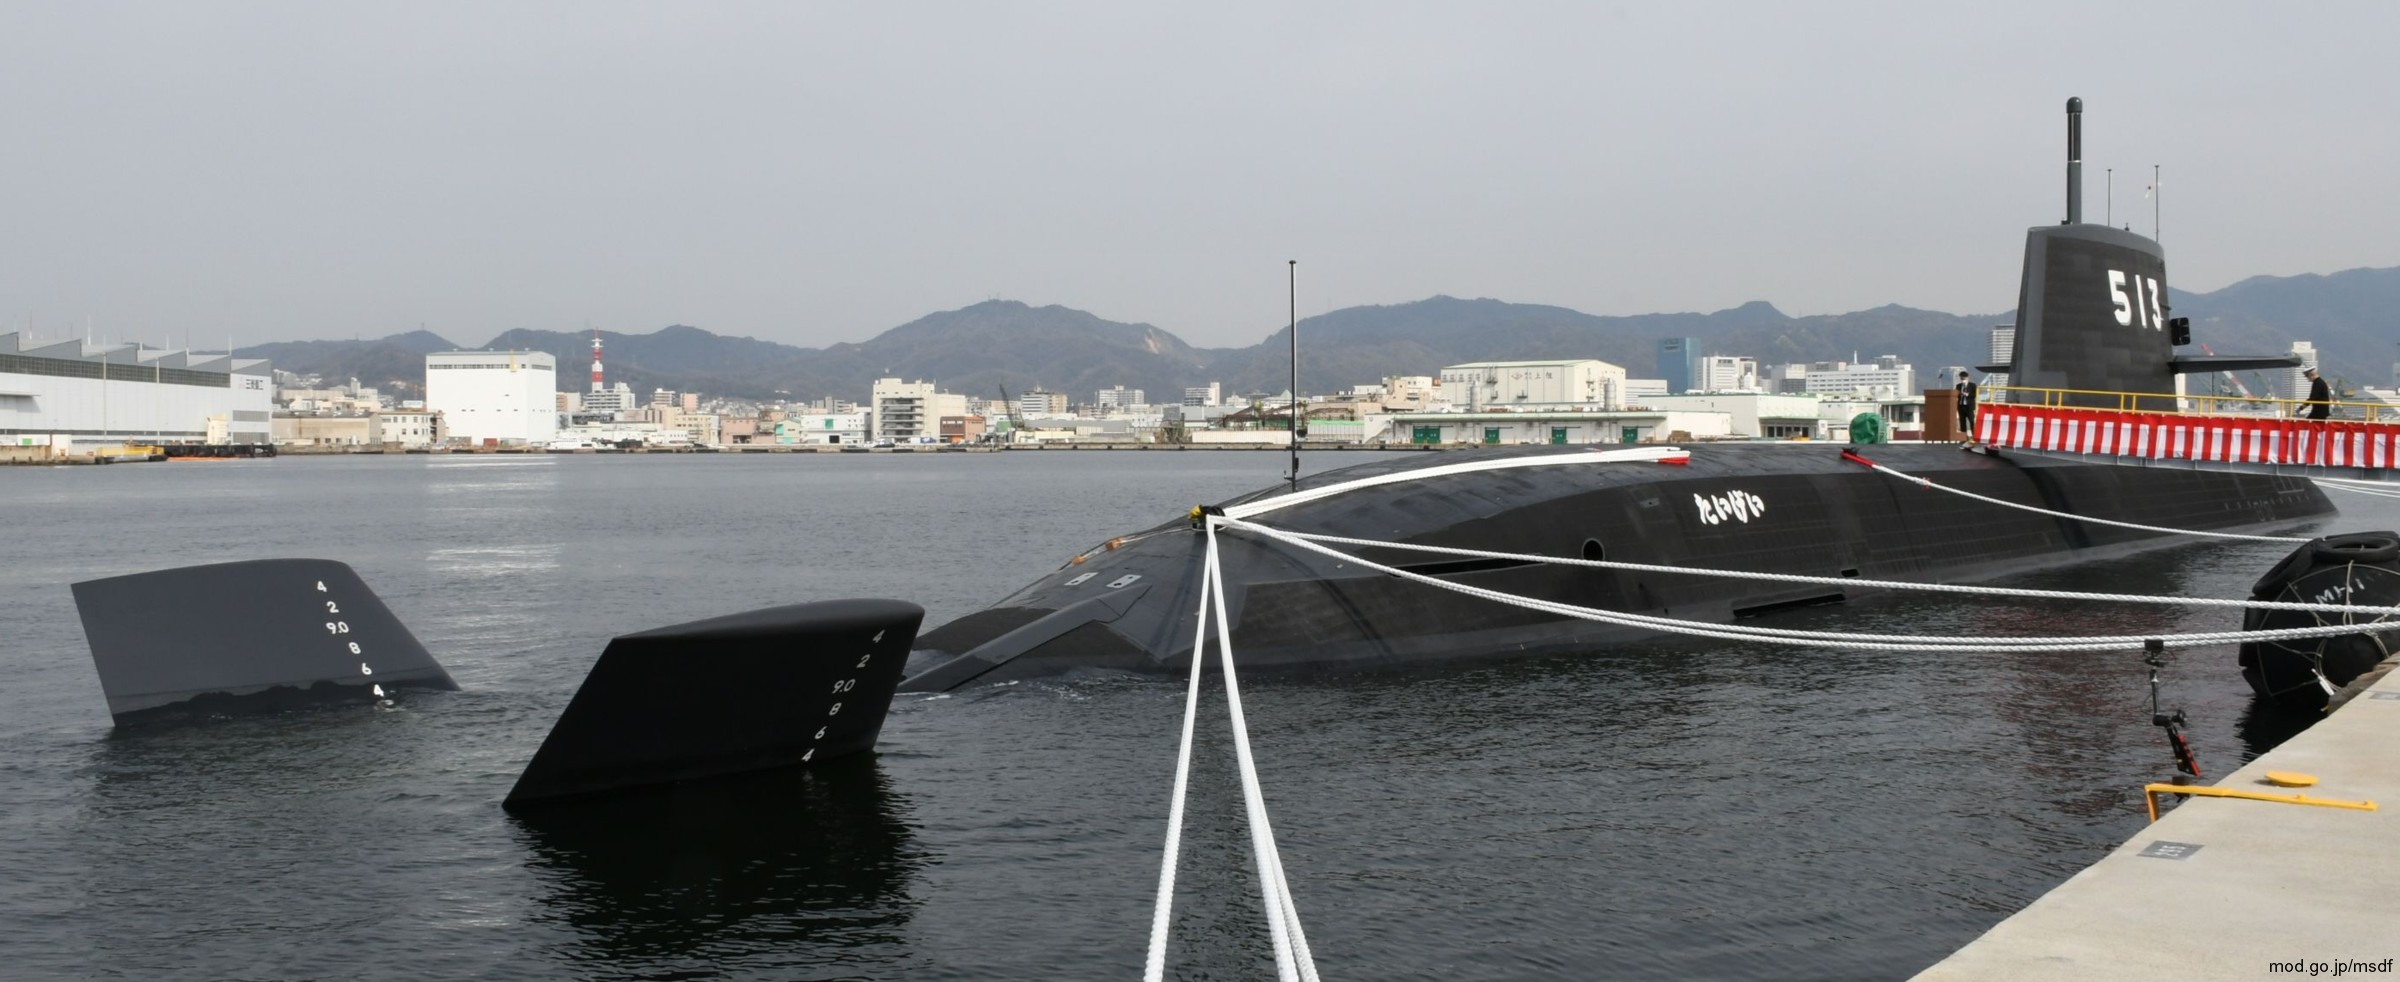 ss-513 js taigei 29ss class attack submarine ssk aip japan maritime self defense force jmsdf 13